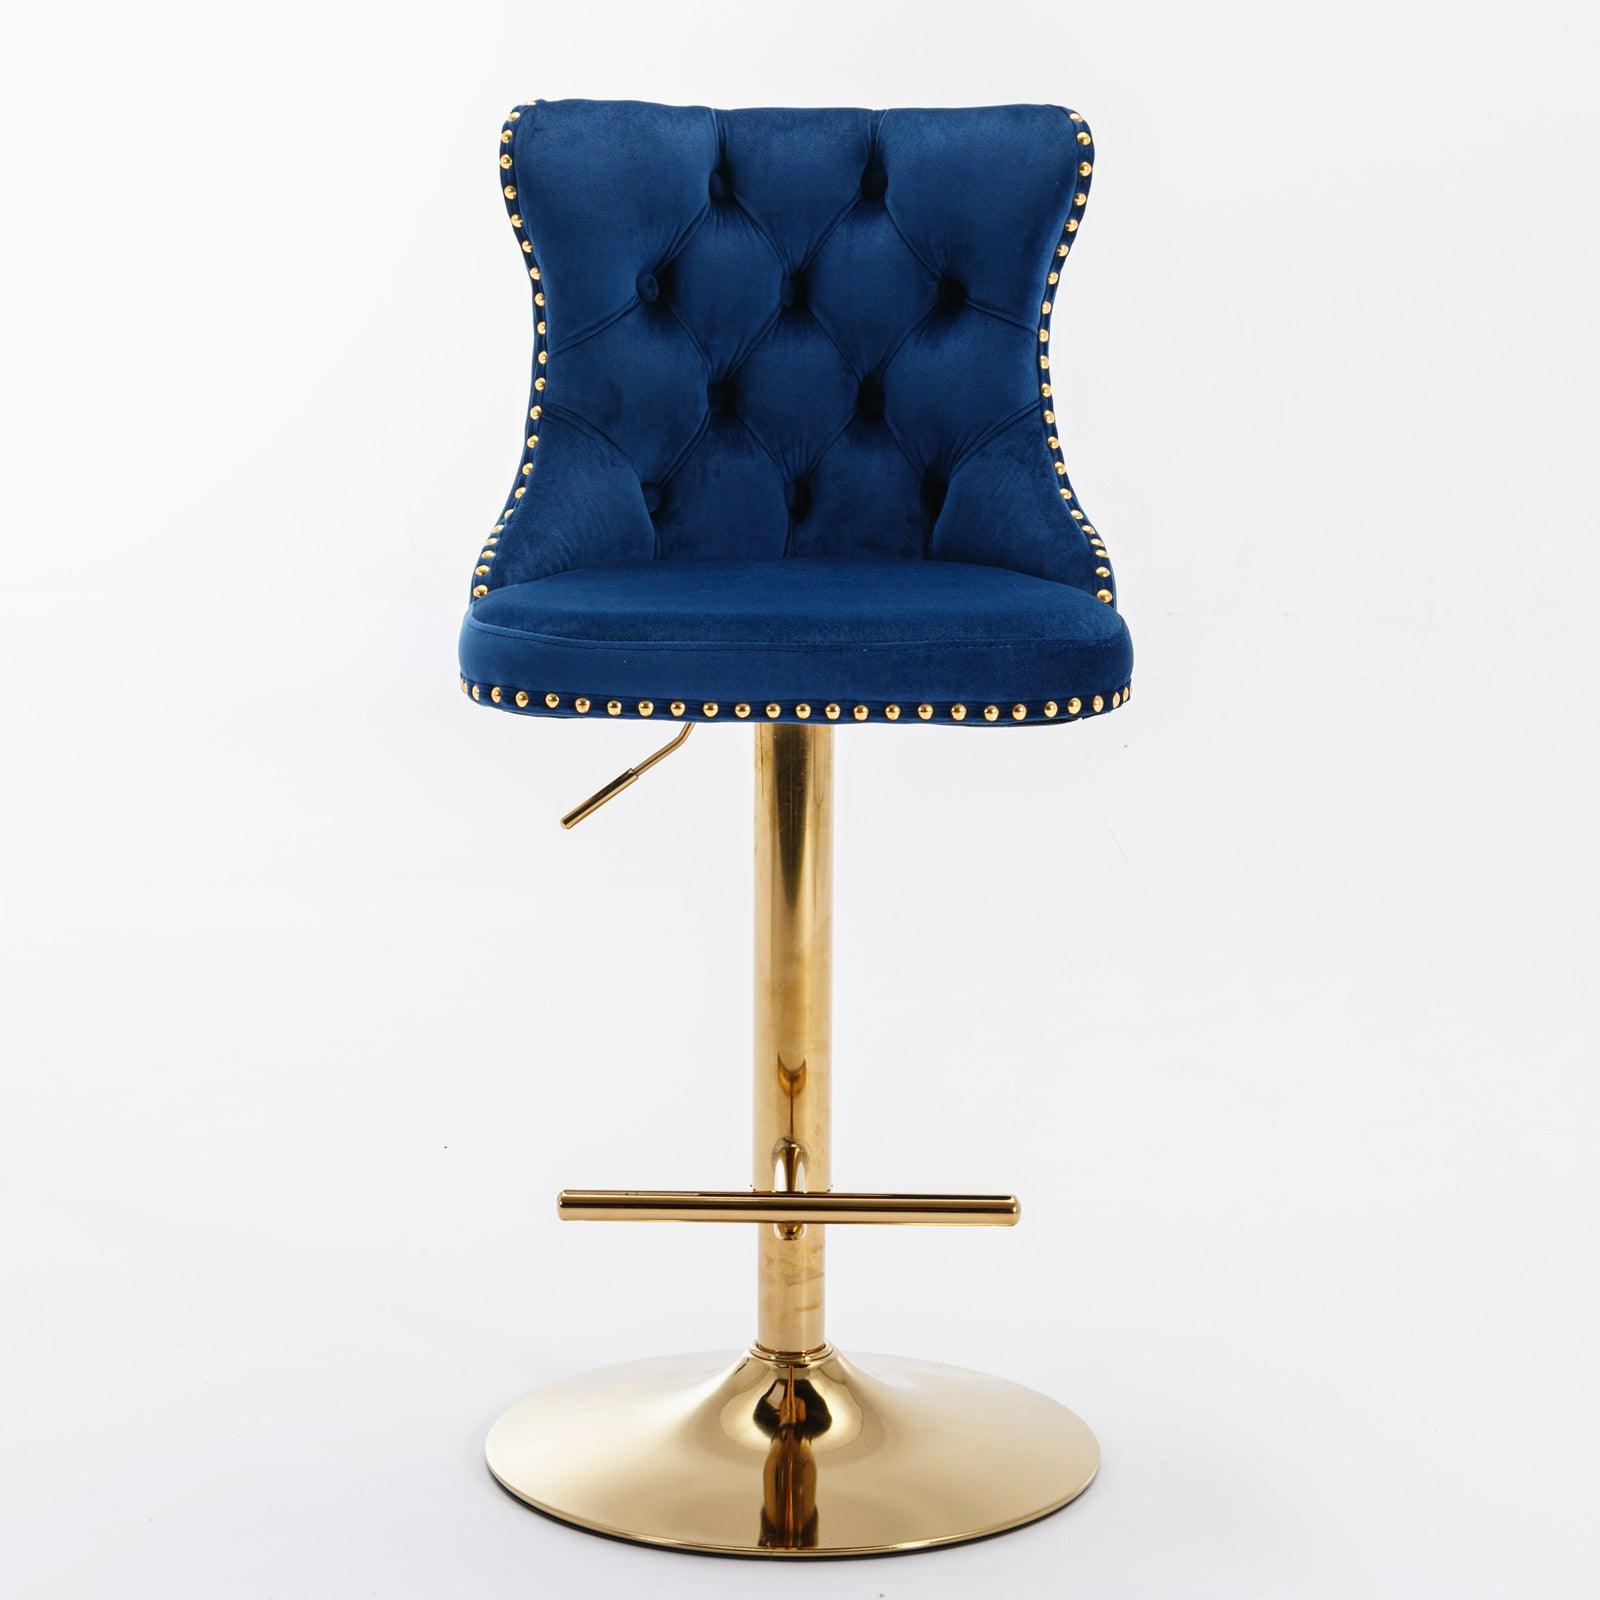 🆓🚛 Pactoc 2Pc Golden Swivel Velvet Barstools Adjusatble Seat Height 25-33 Inch, Blue